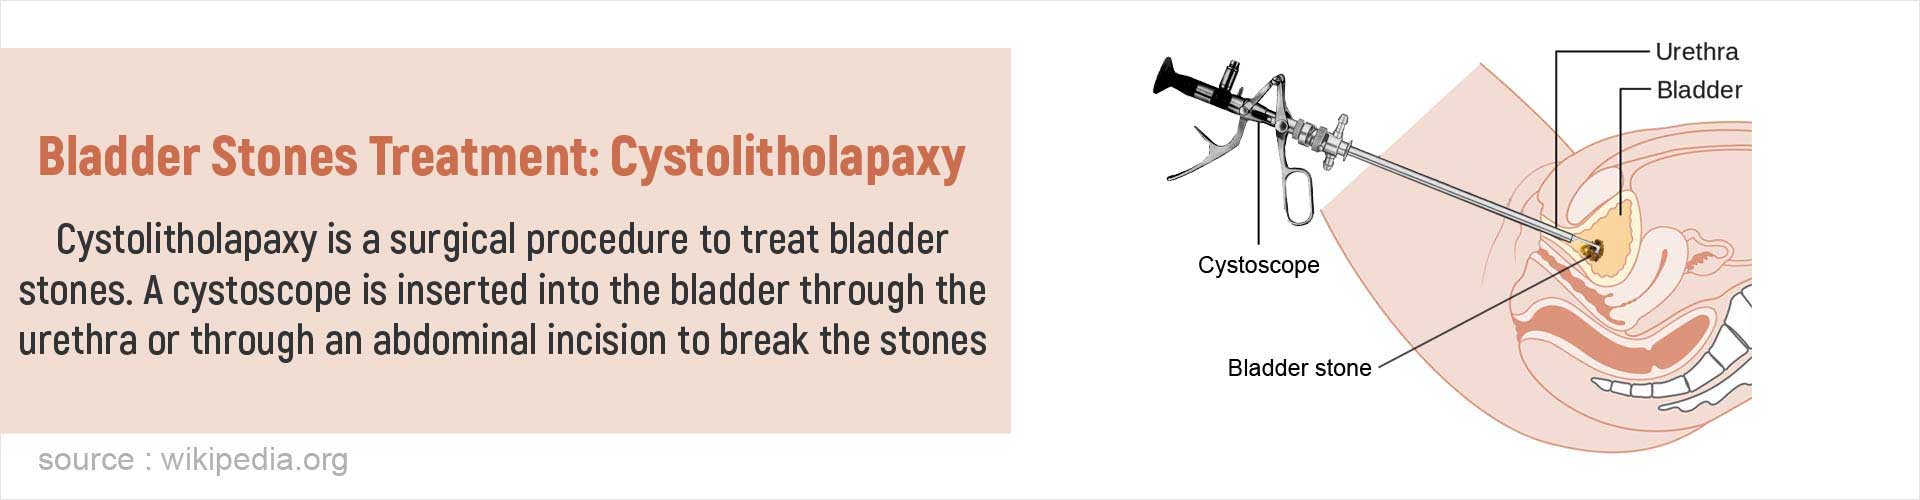 Bladder Stones Treatment: Cystolitholapaxy